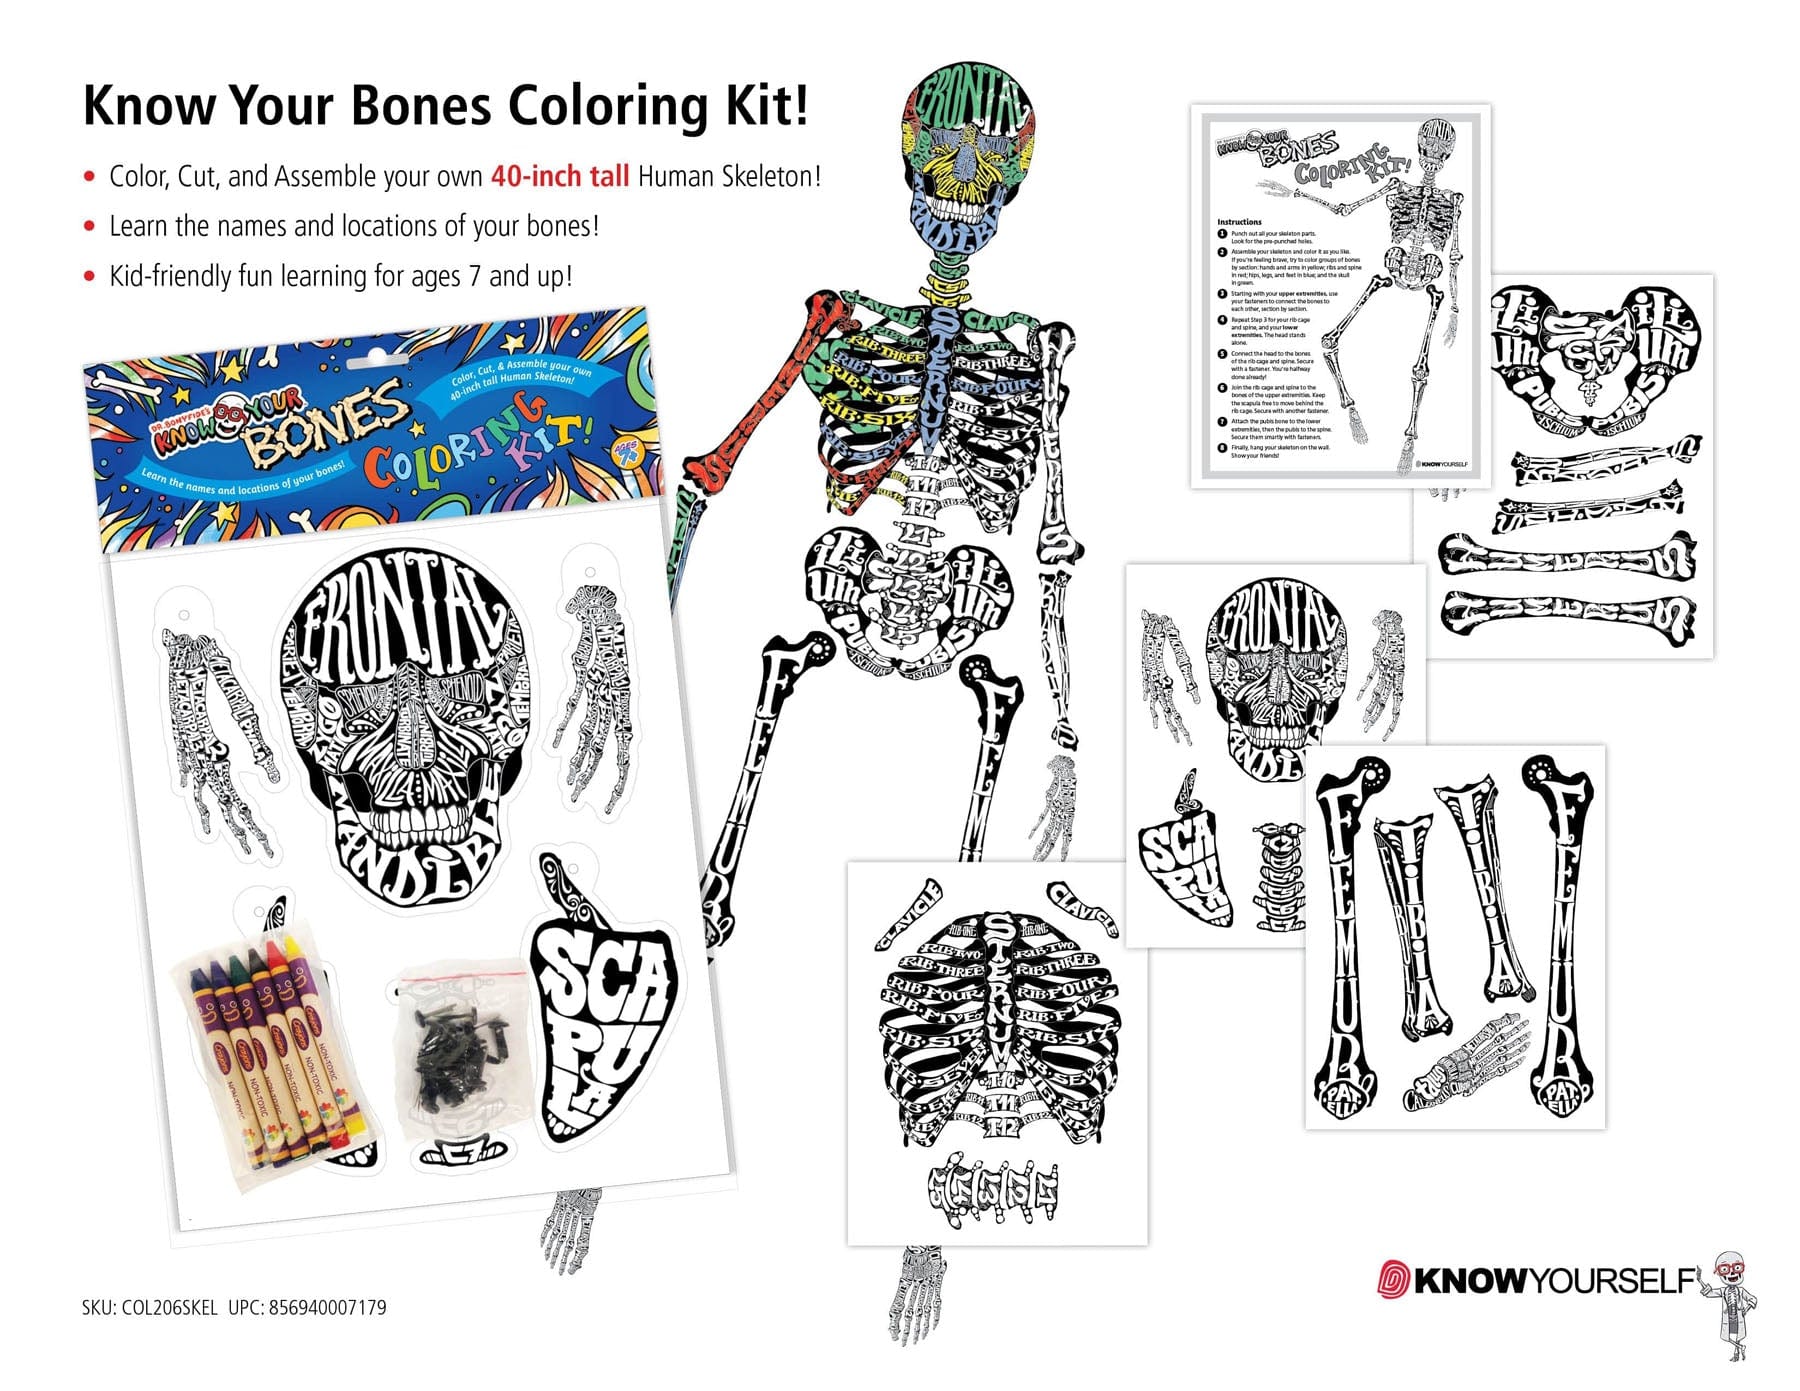 Dr. Bonyfide's Know Your Bones: Coloring Kit Health Education for Children